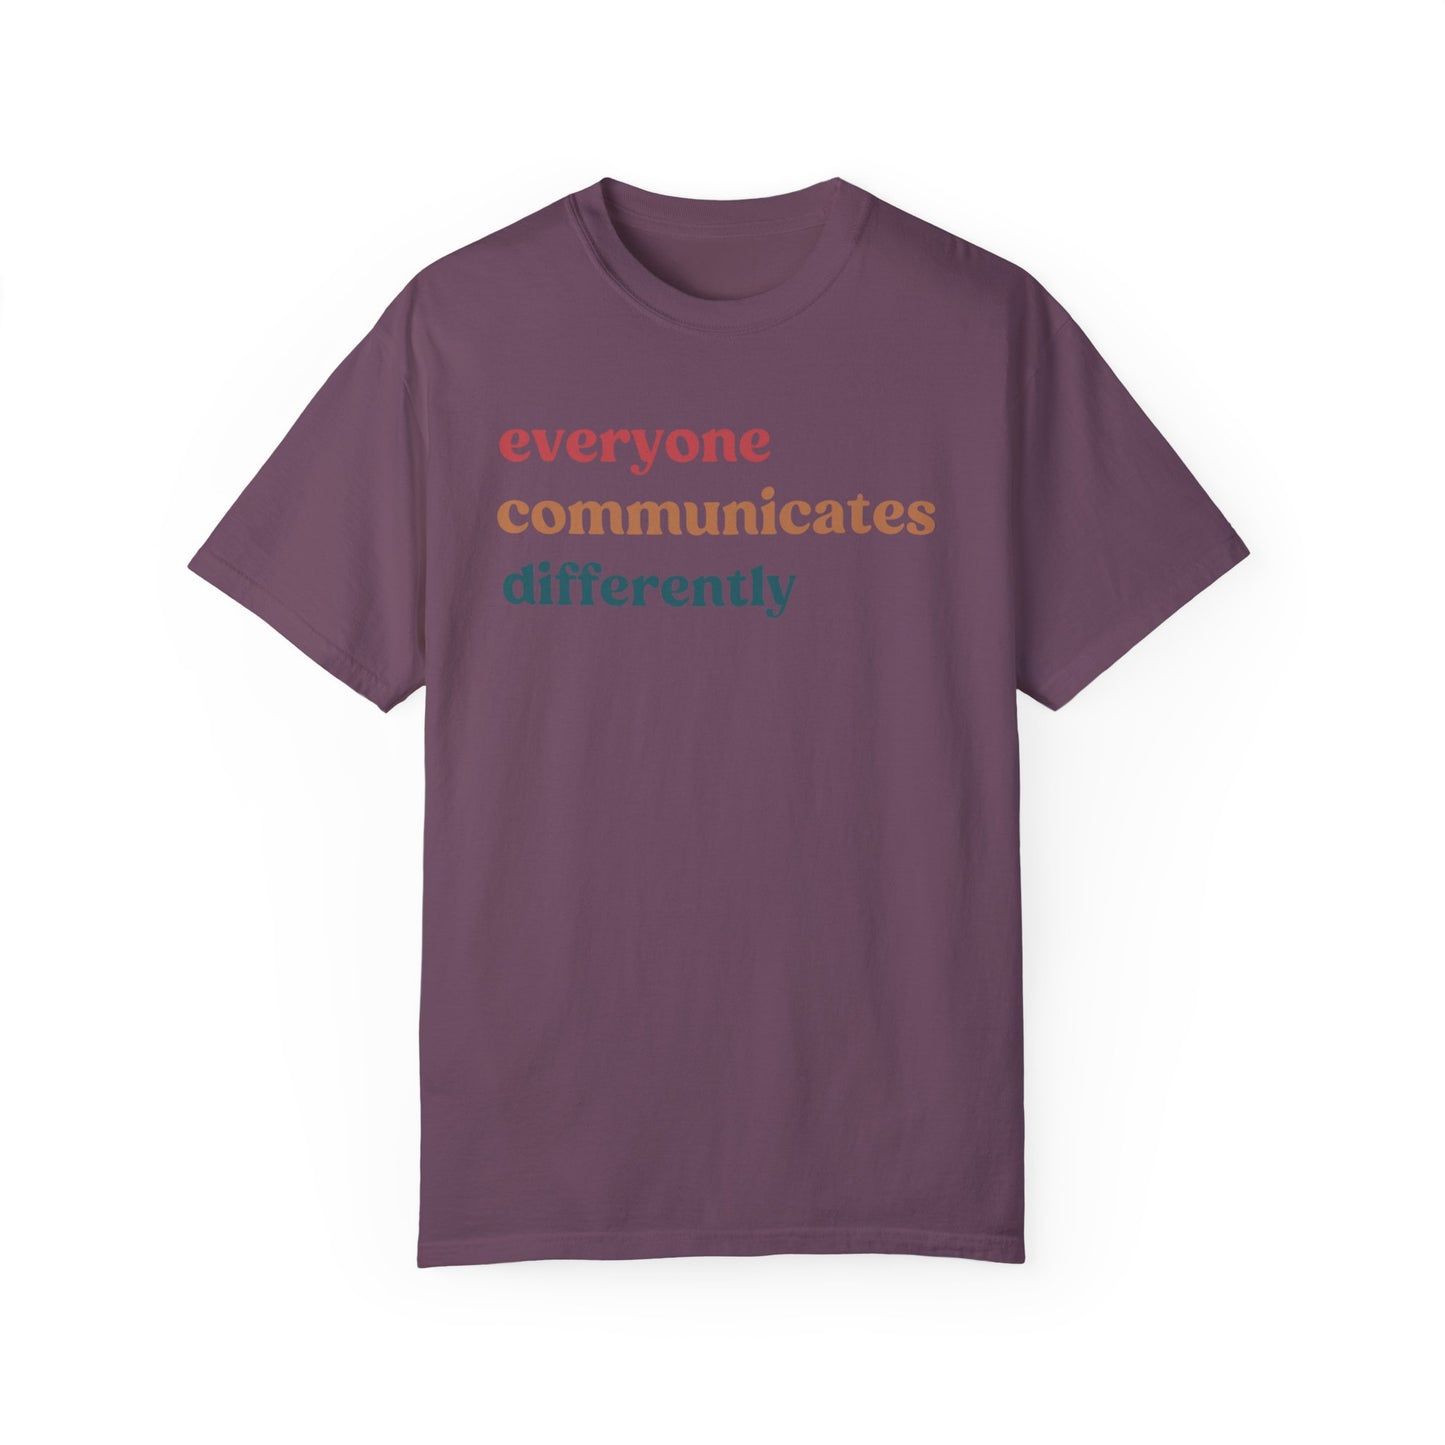 Everyone Communicates Differently Shirt, Special Education Teacher Shirt Inclusive Shirt, Autism Awareness Shirt, ADHD Shirt, CC810